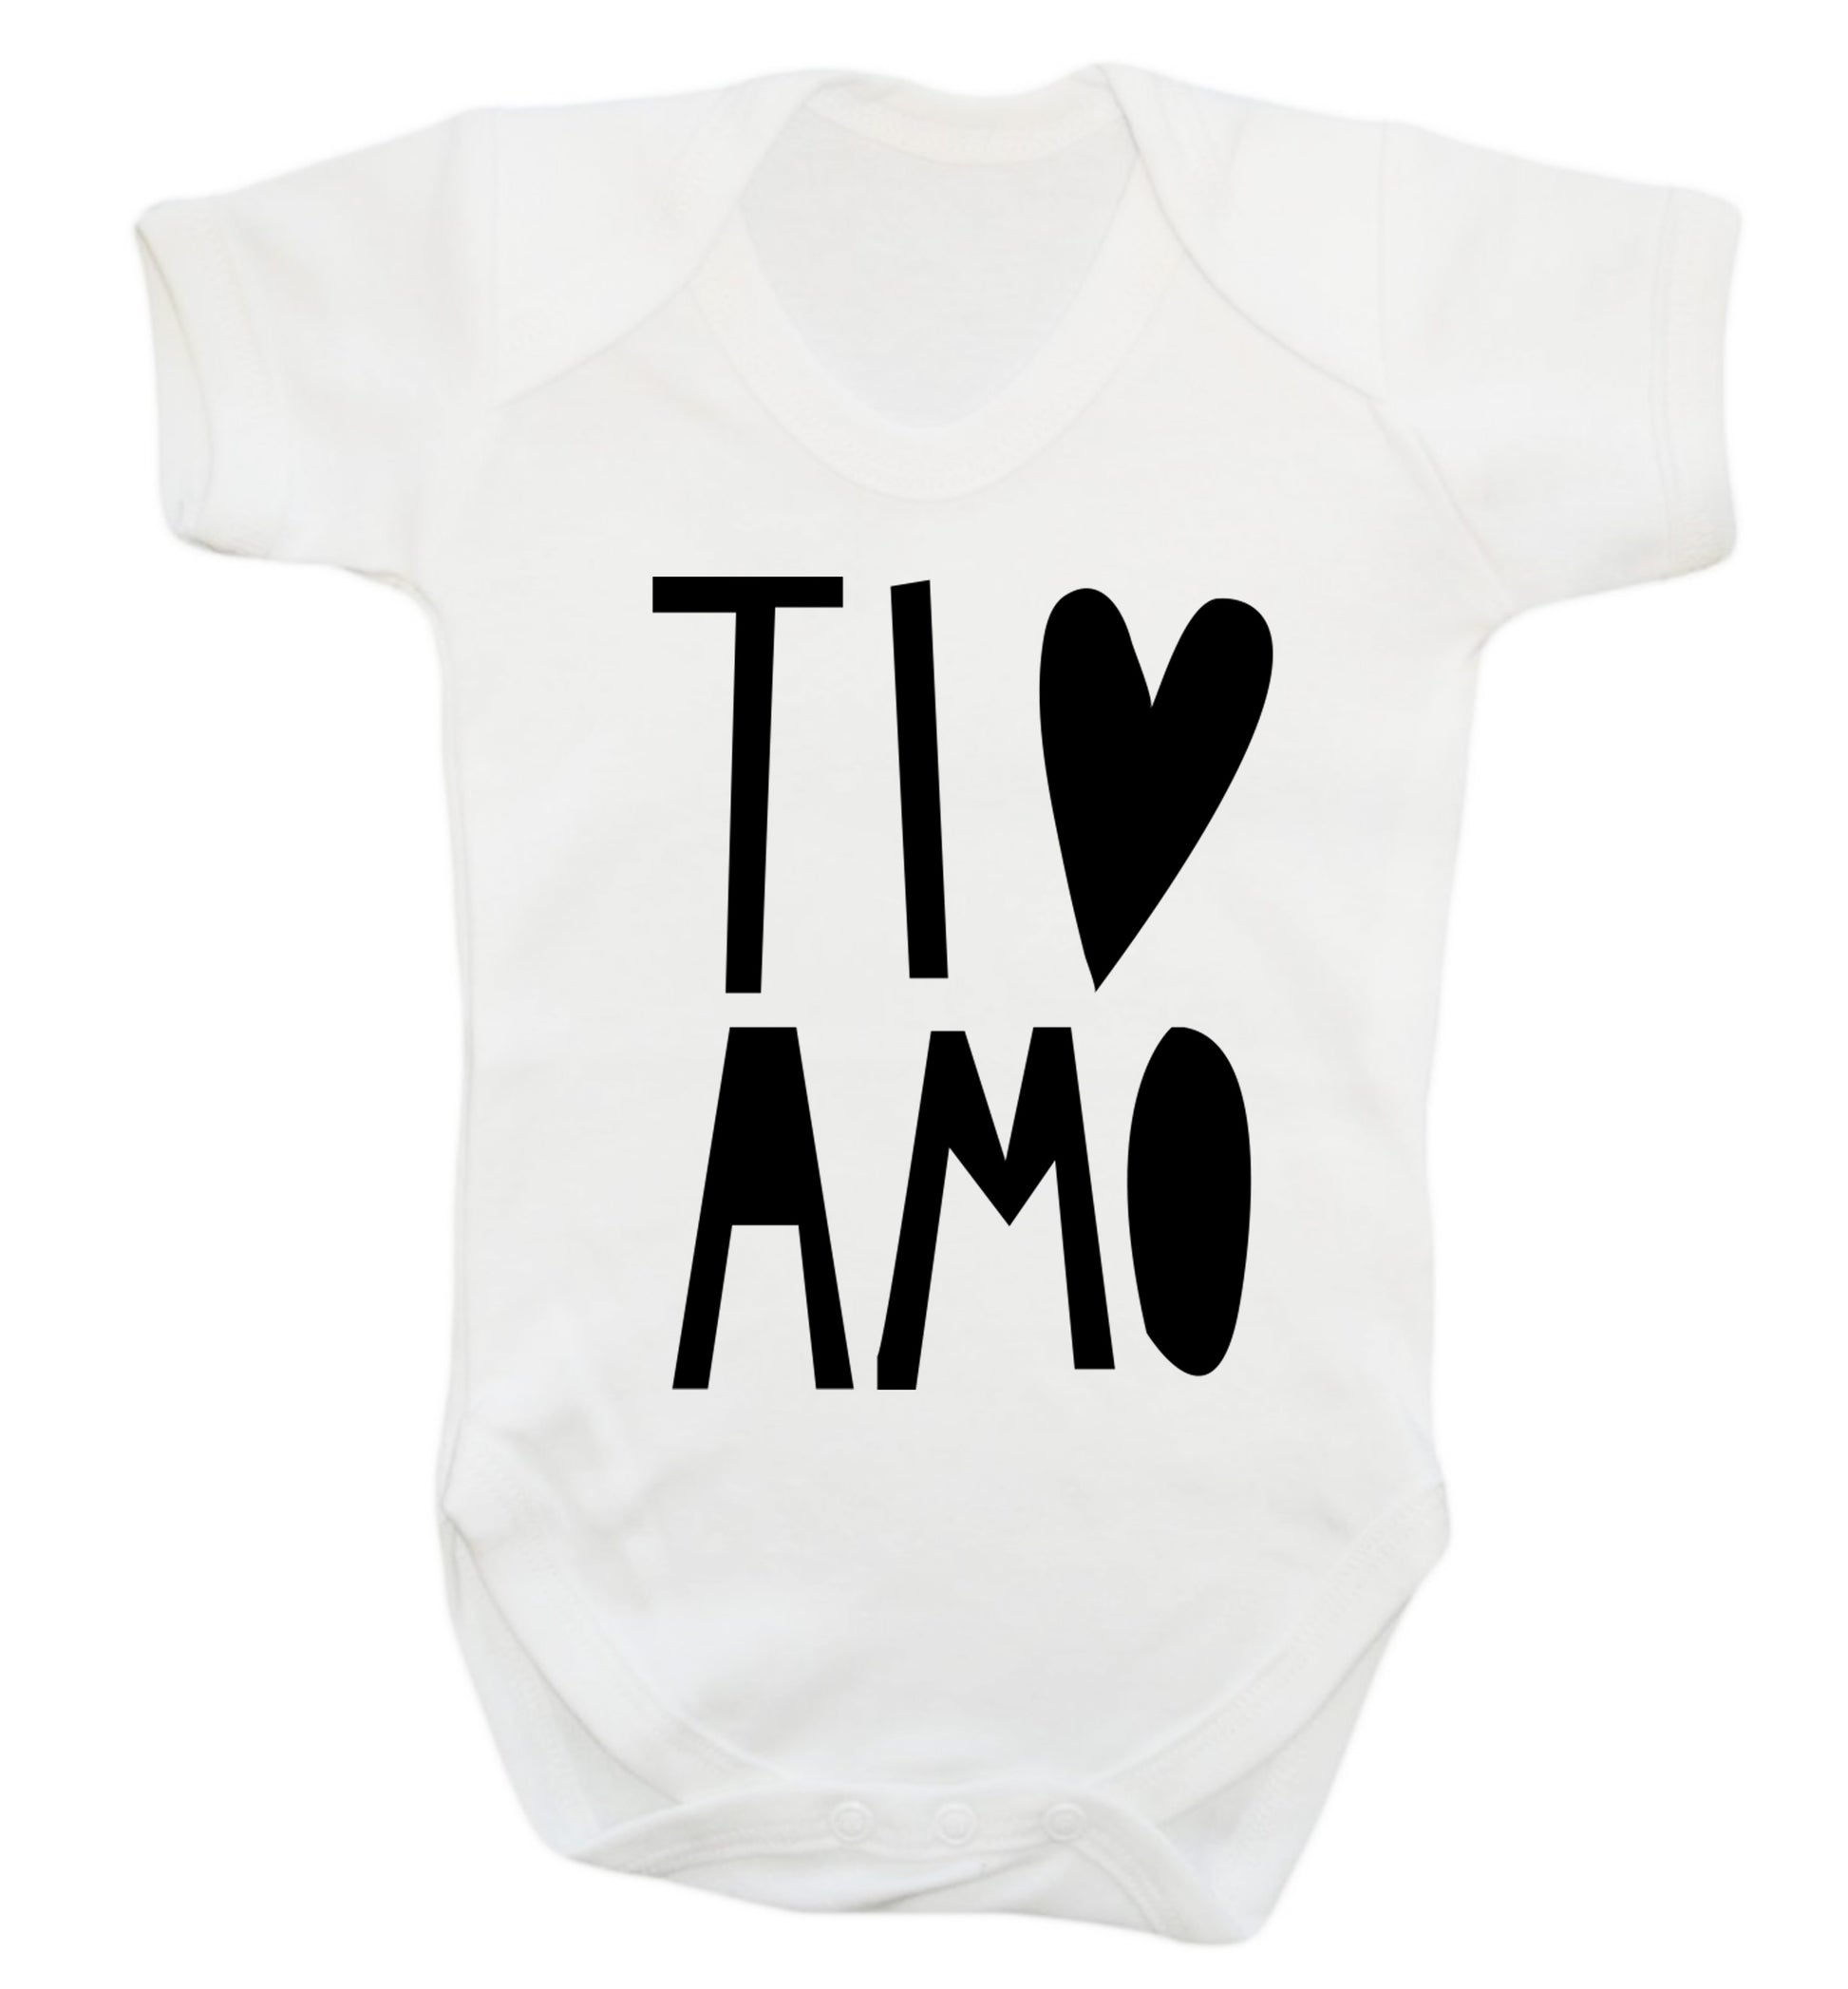 Ti amo - I love you Baby Vest white 18-24 months